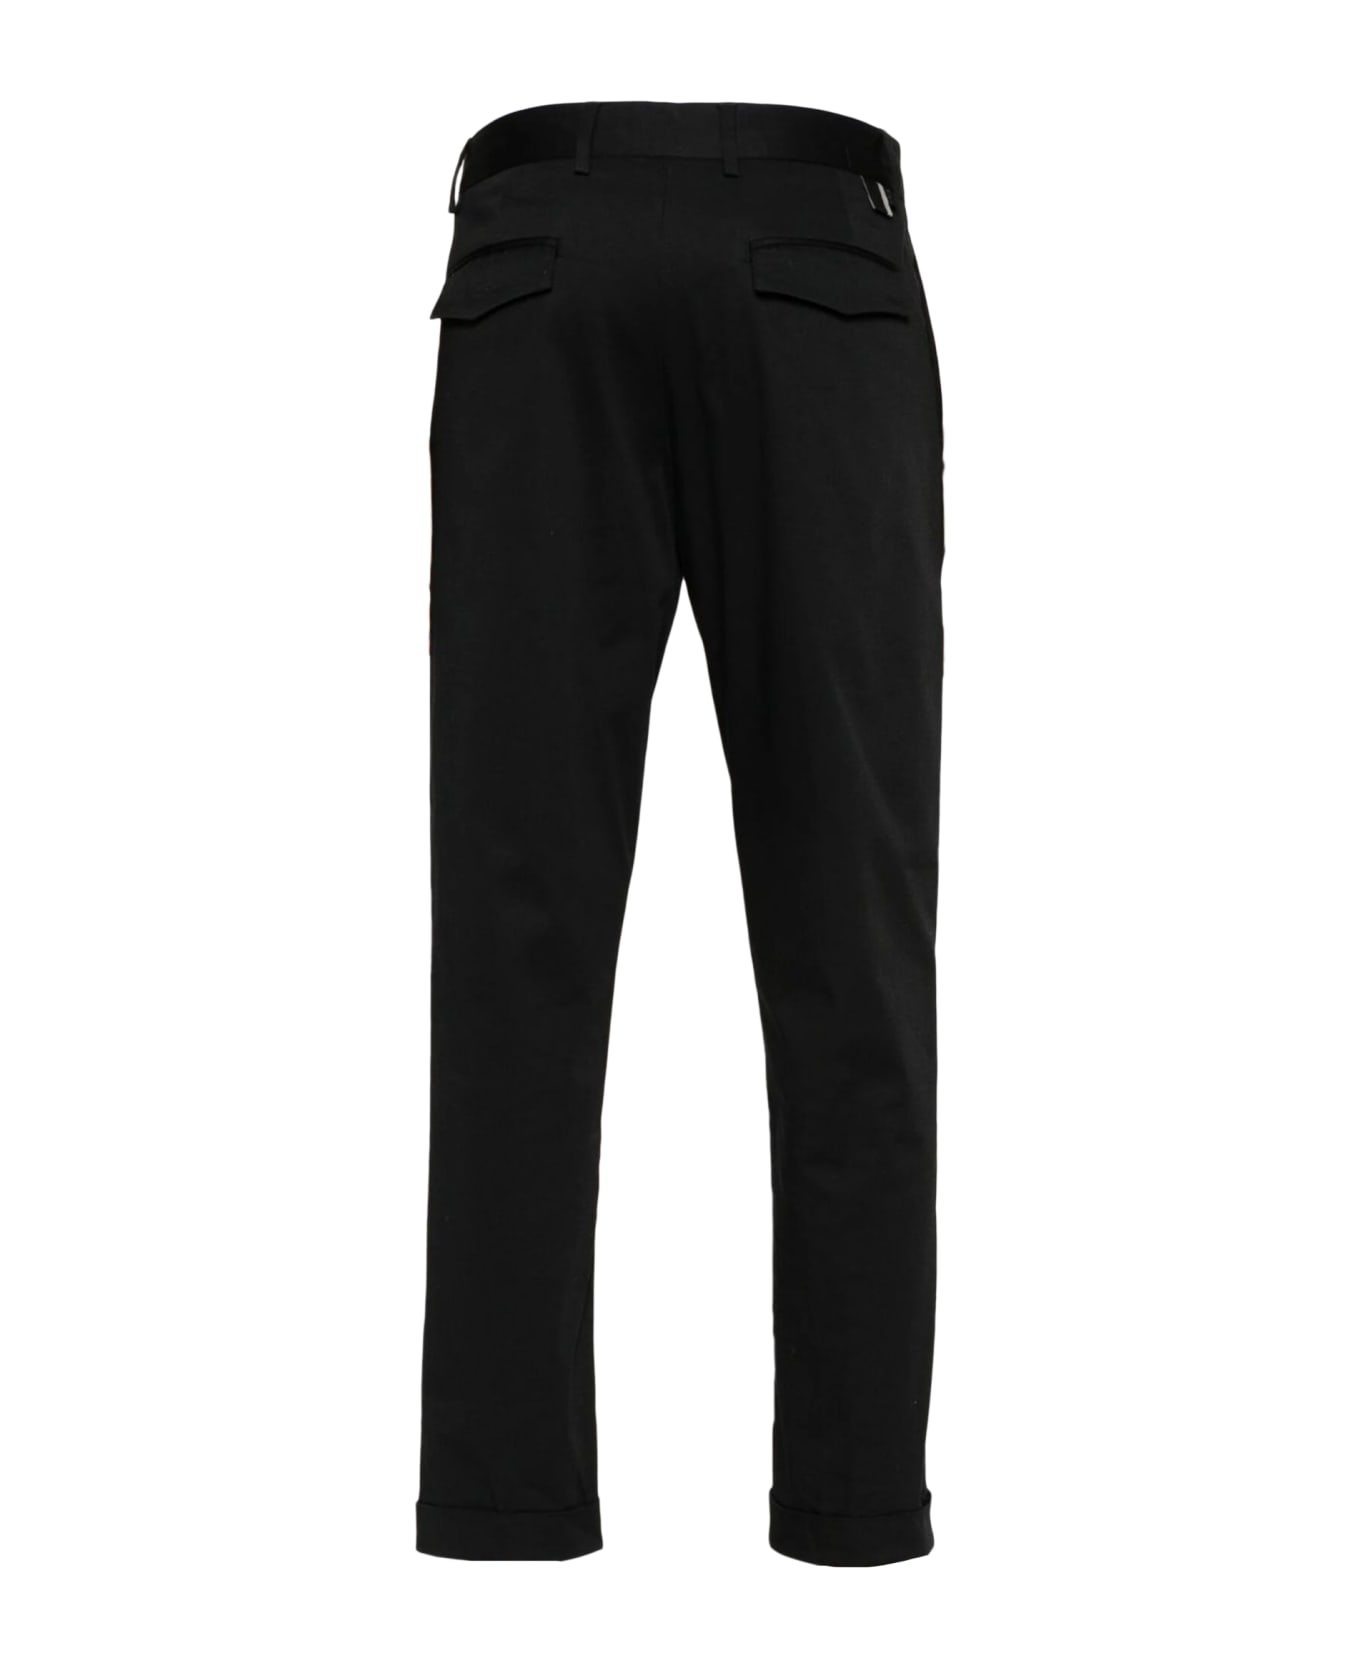 Low Brand Trousers Black - Black